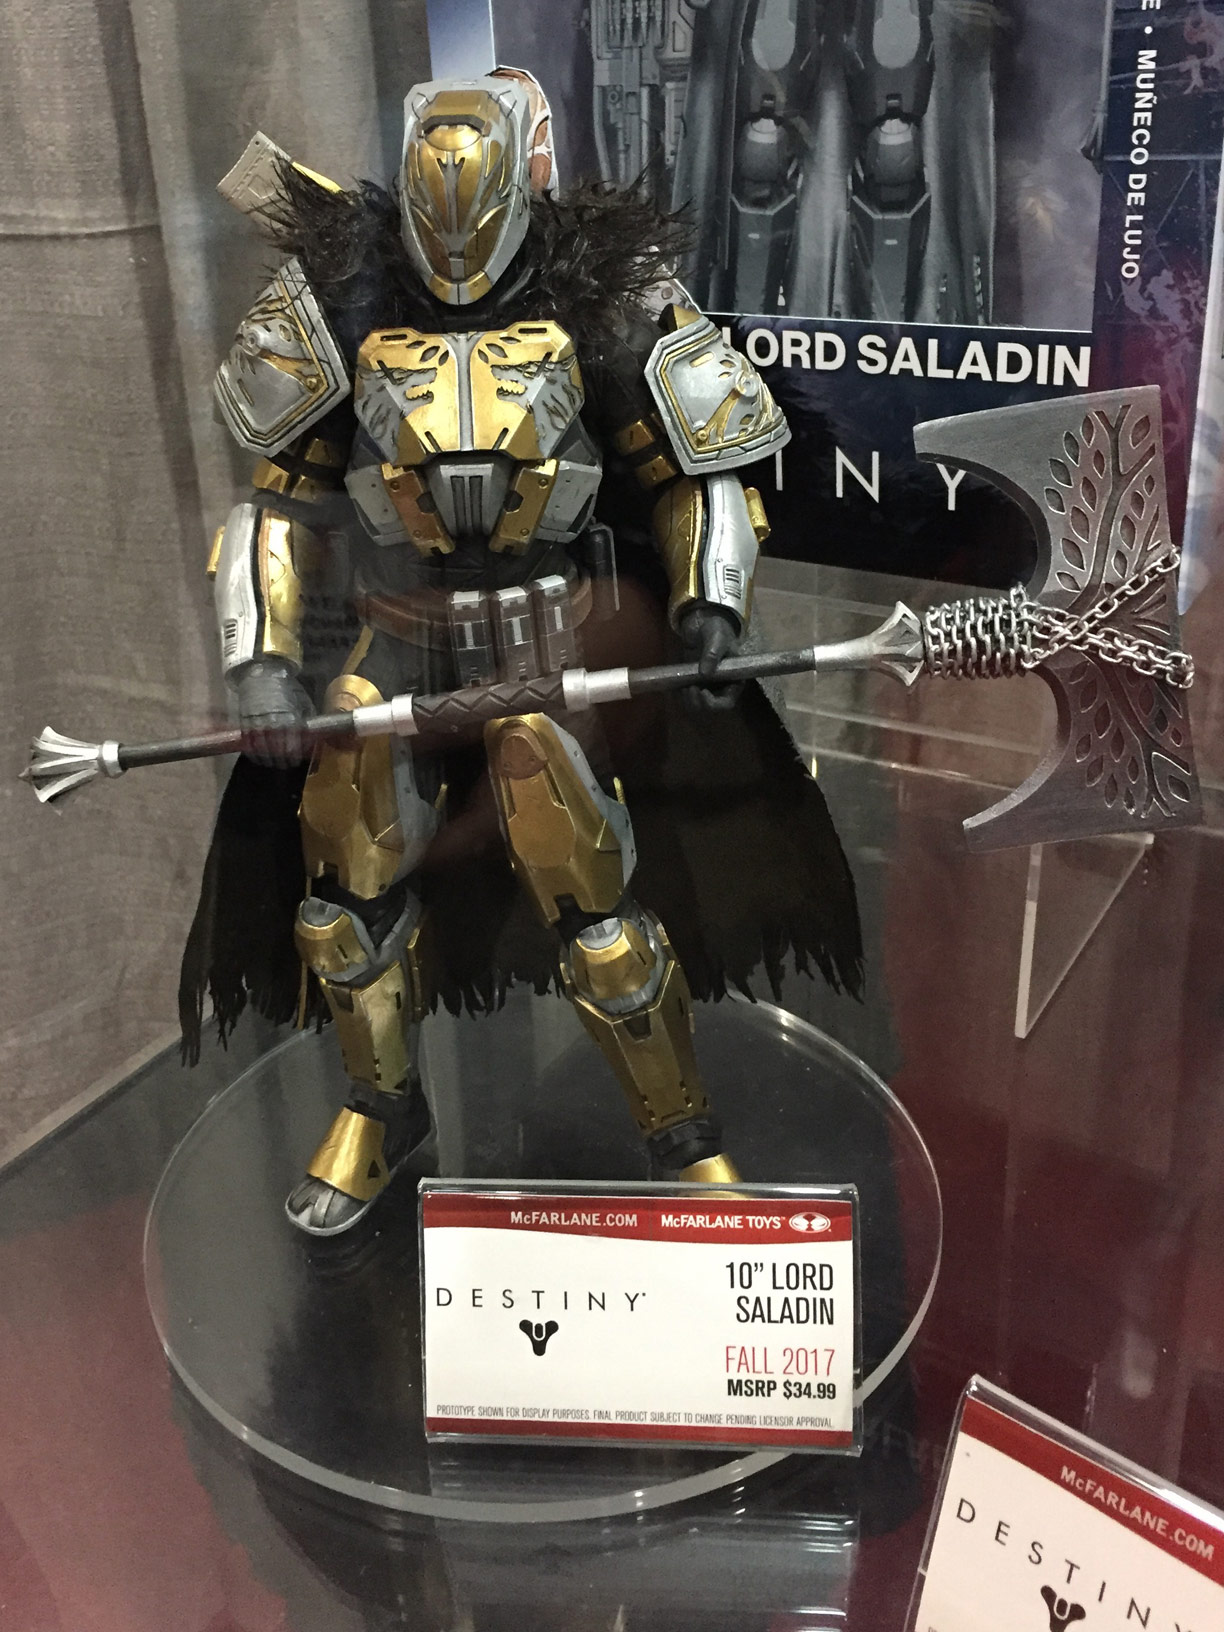 Destiny 2017 Lord Saladin Figure at Toy Fair 2017